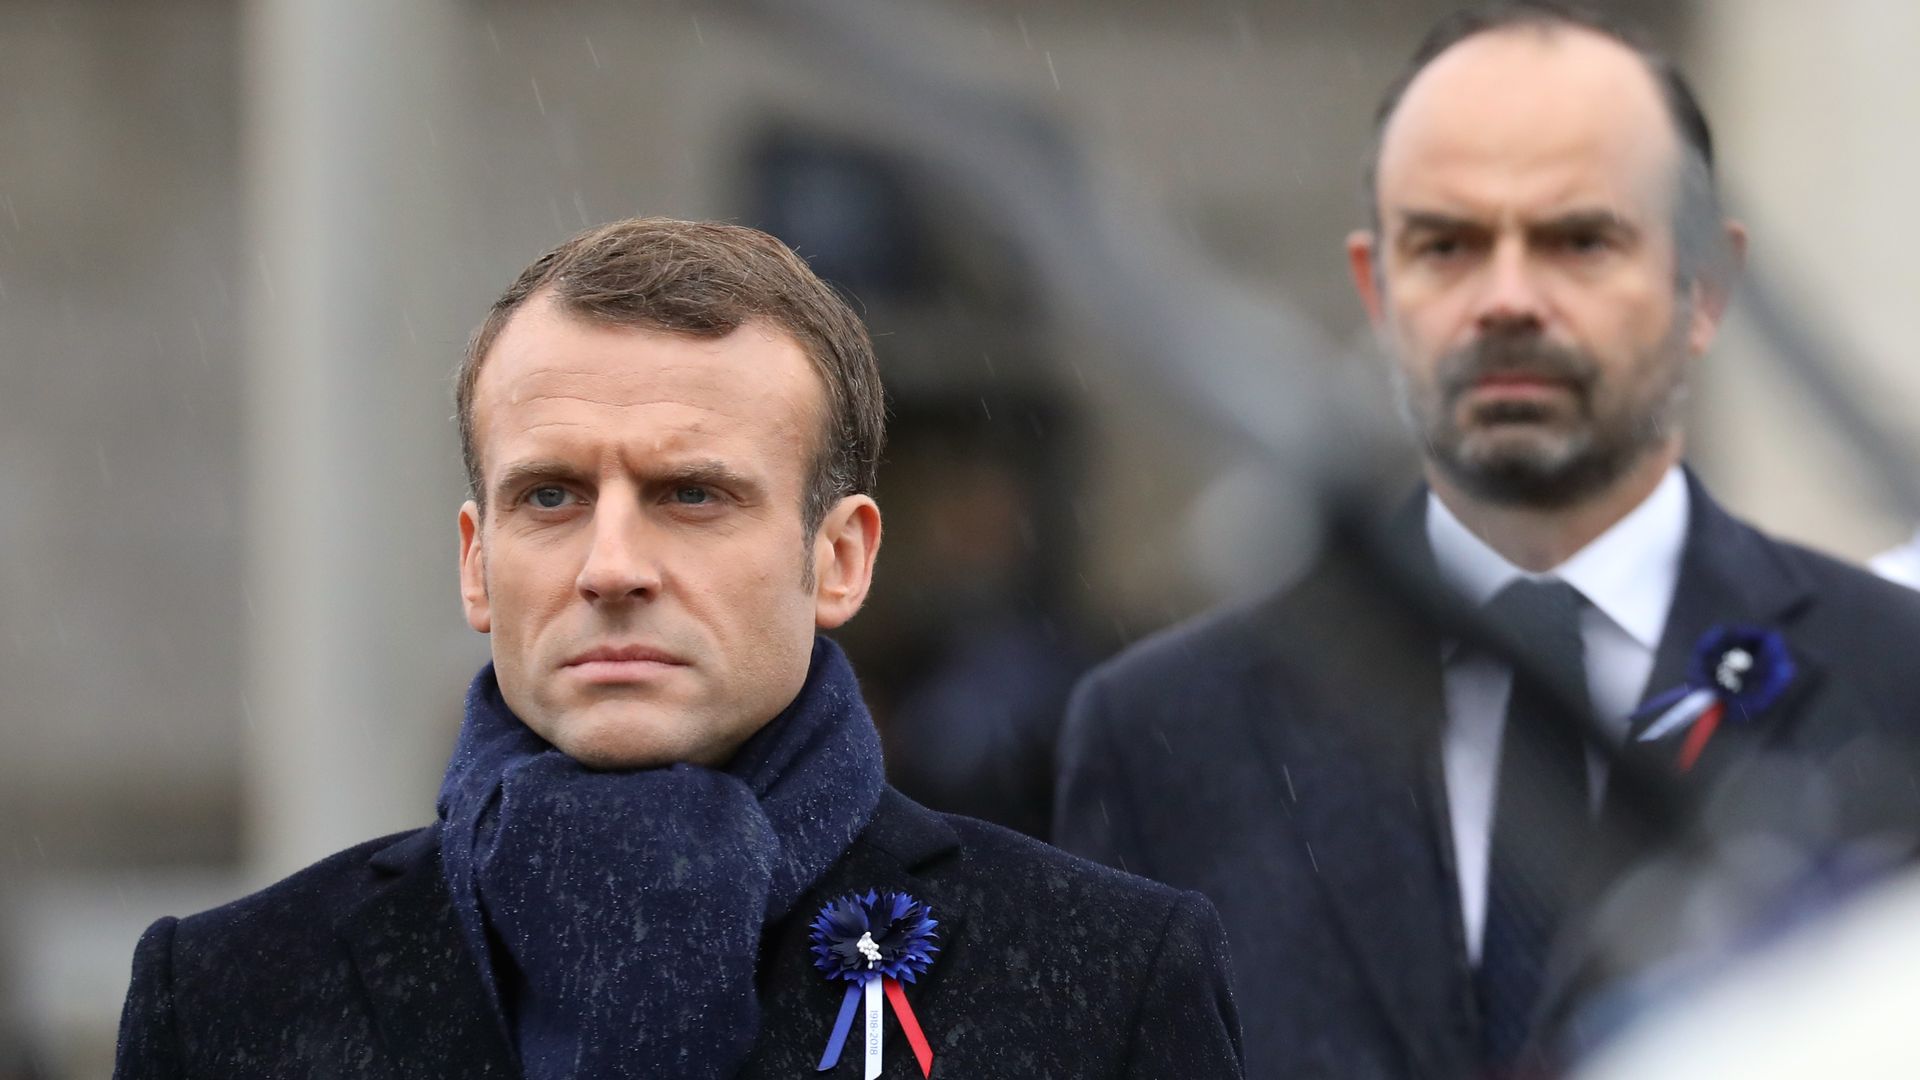 Macron at WWI ceremony: 